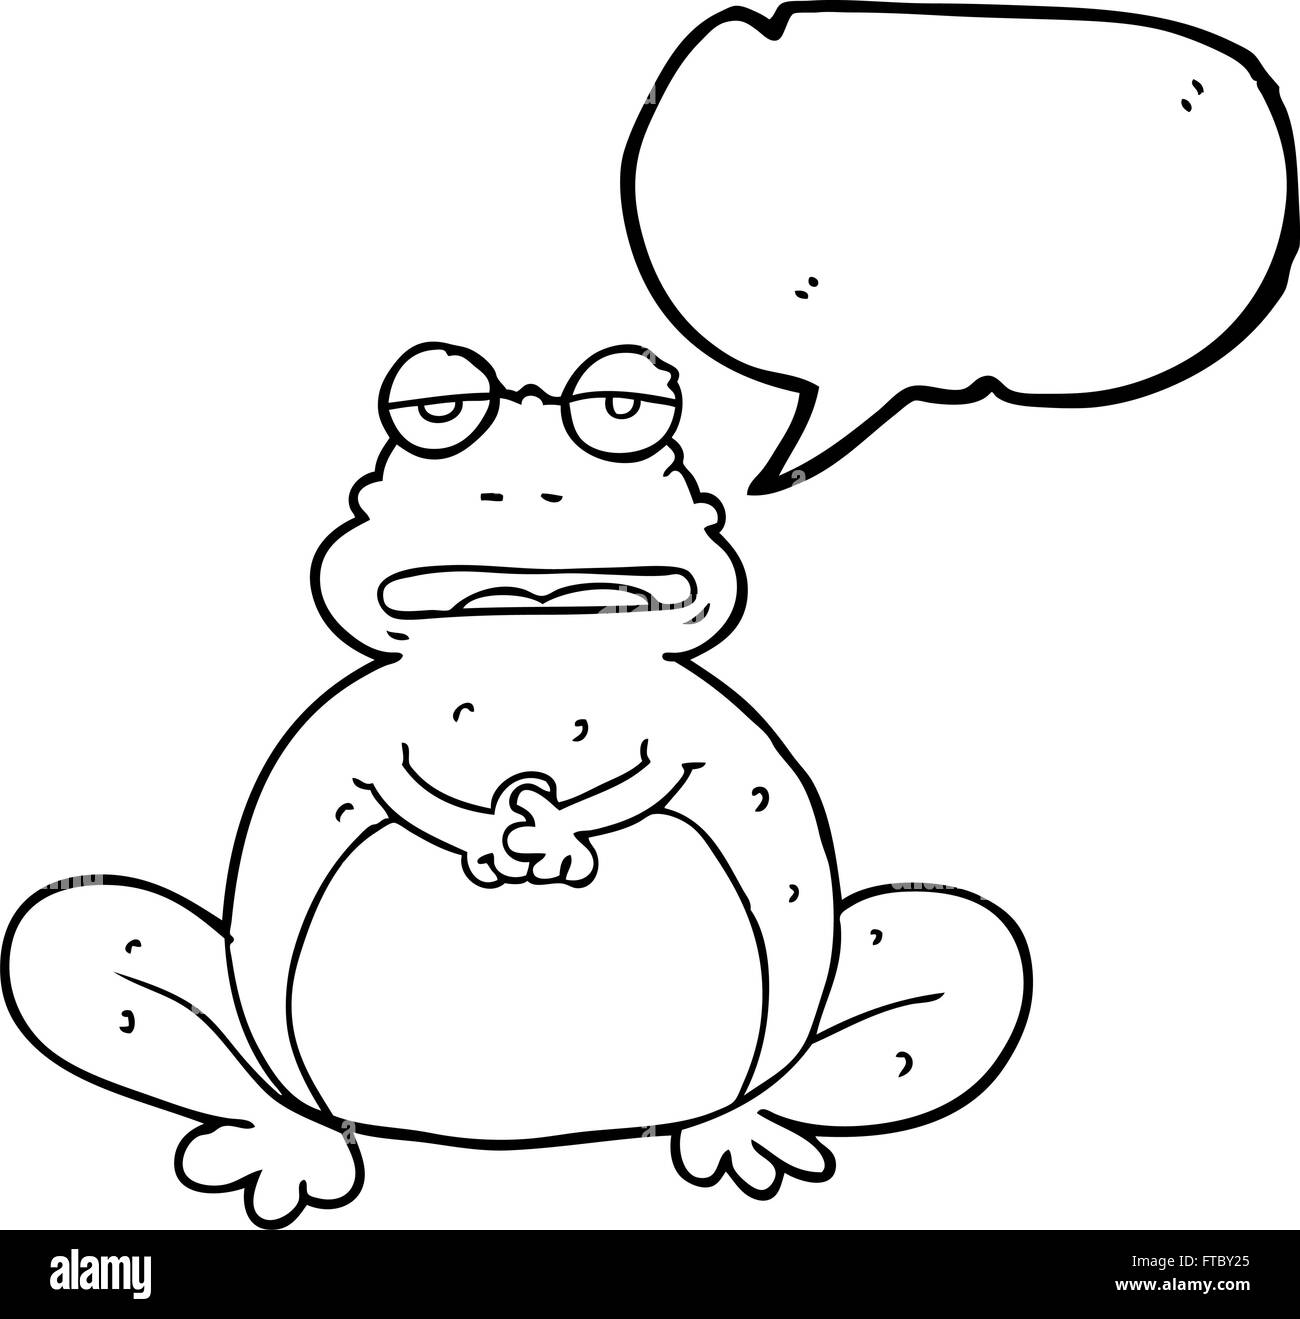 freehand drawn speech bubble cartoon frog Stock Vector